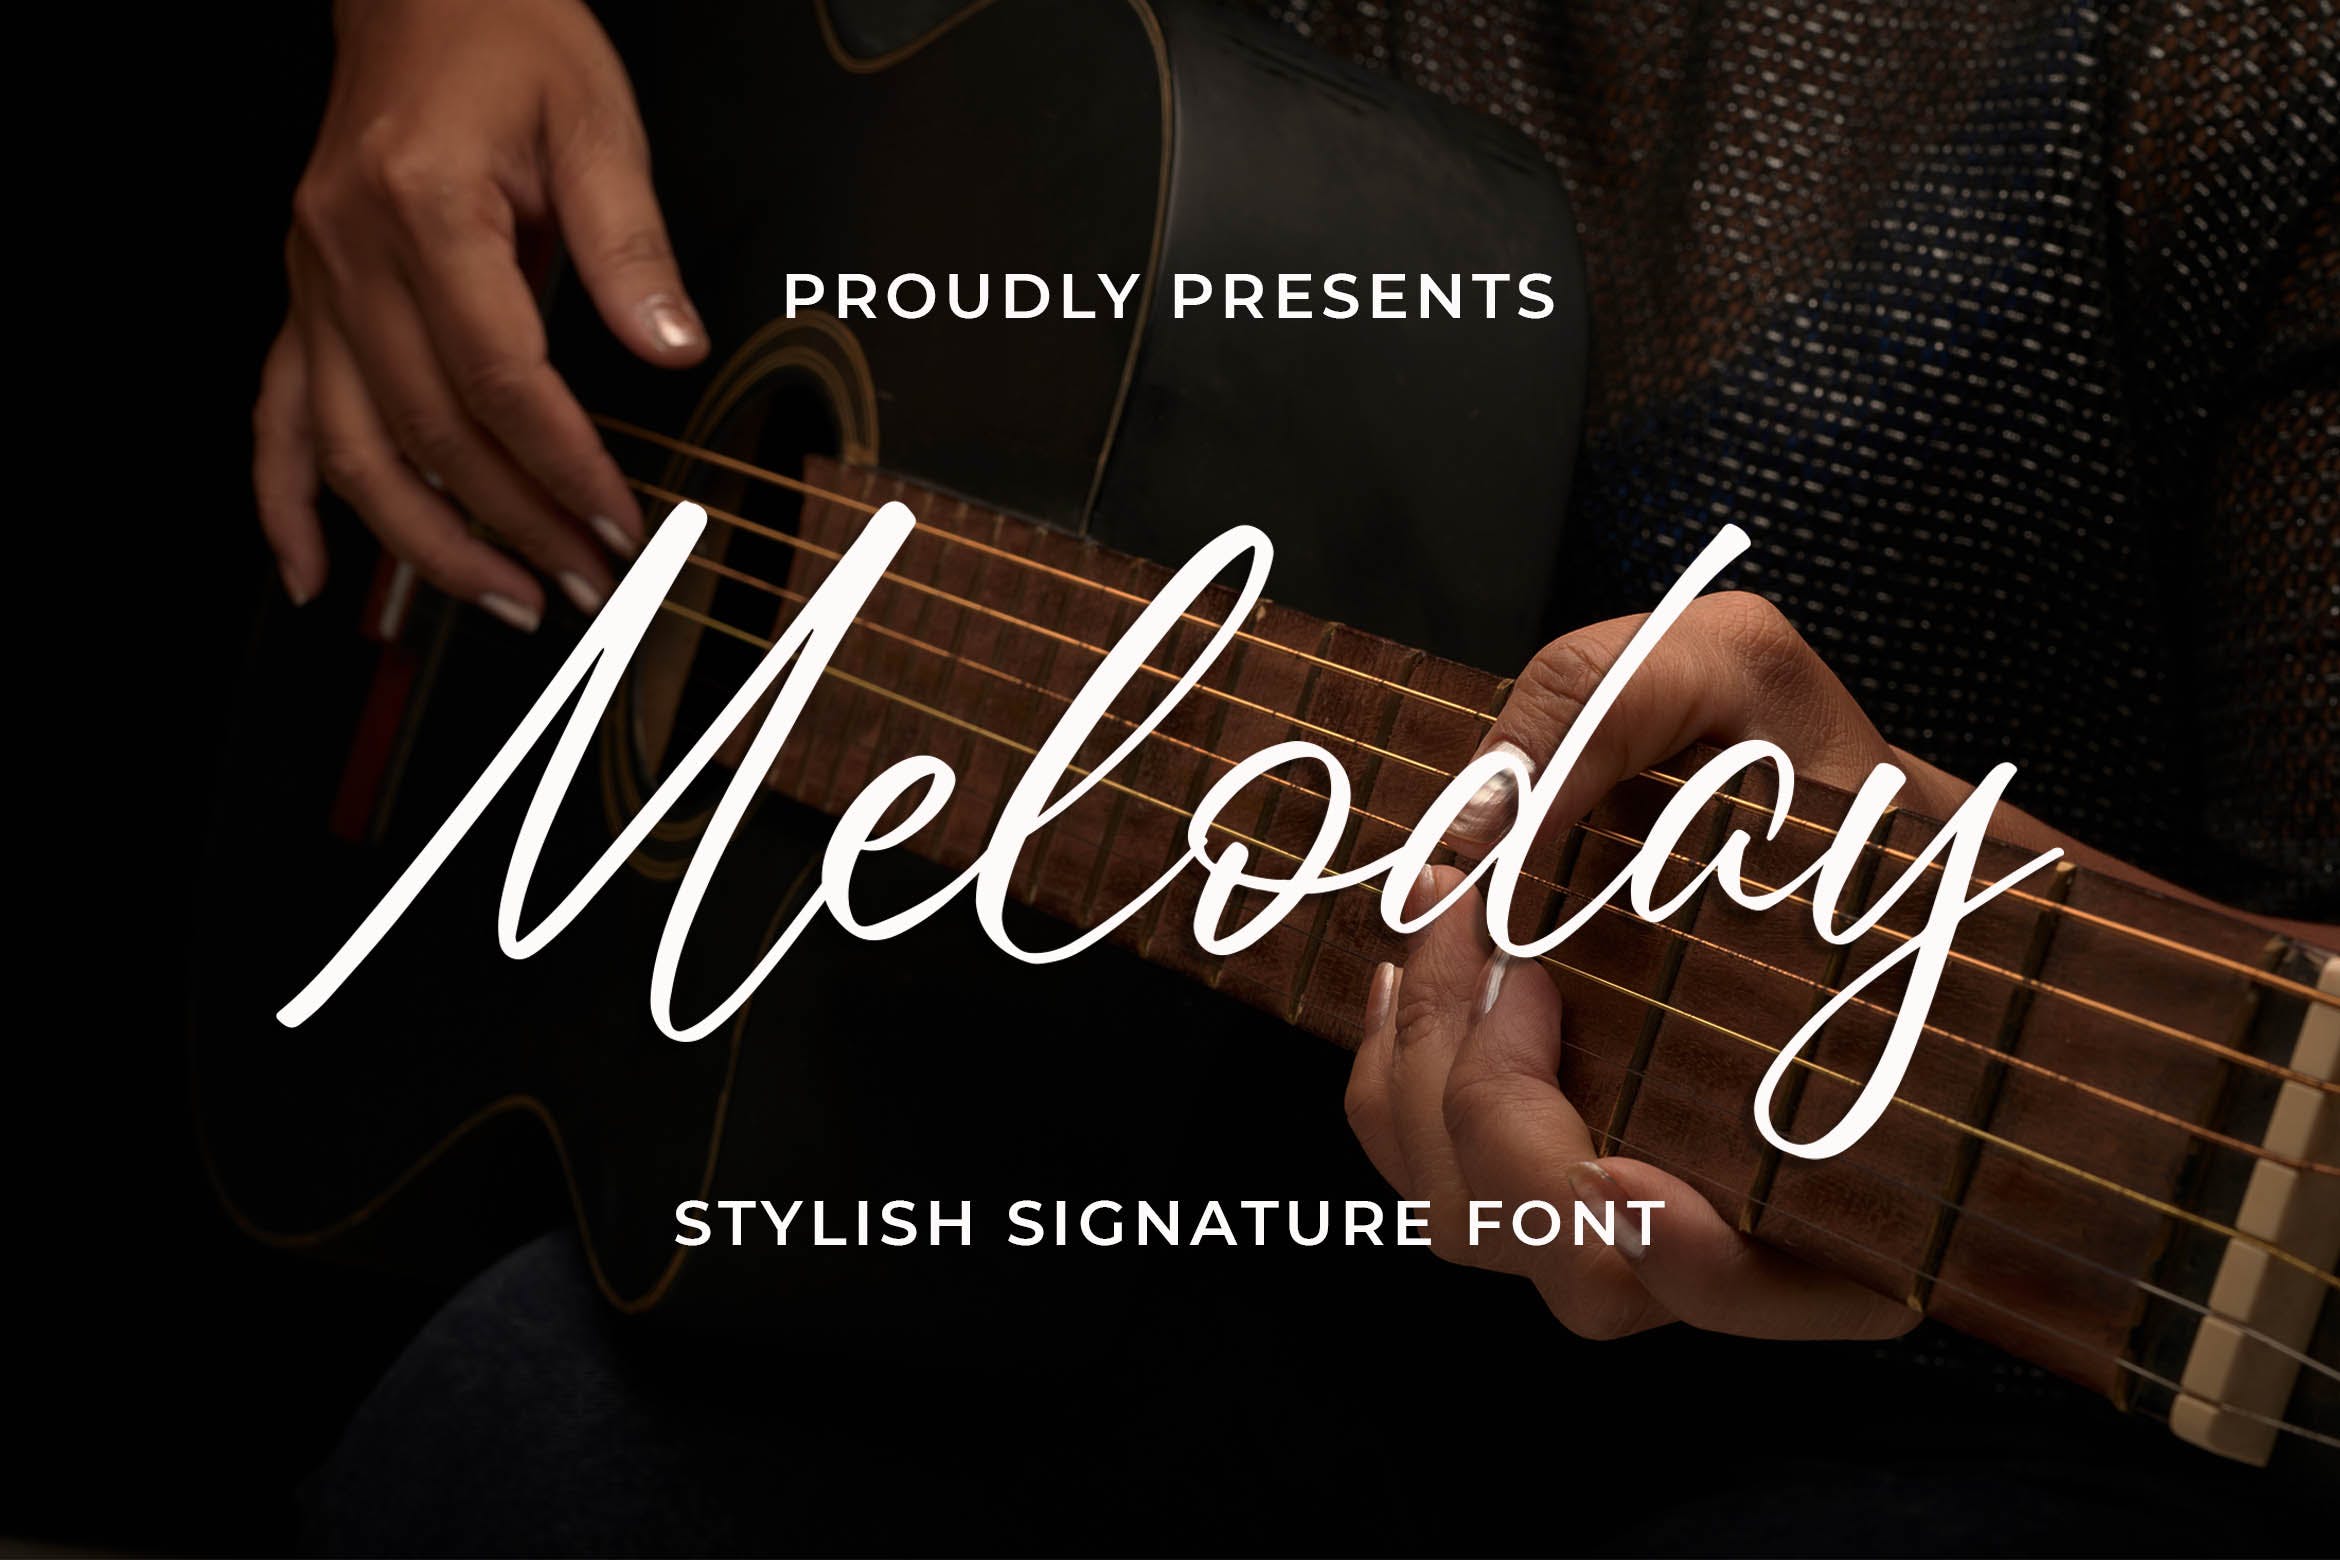 英文时尚签名手写字体16图库精选 Meloday – Stylish Signature Font插图